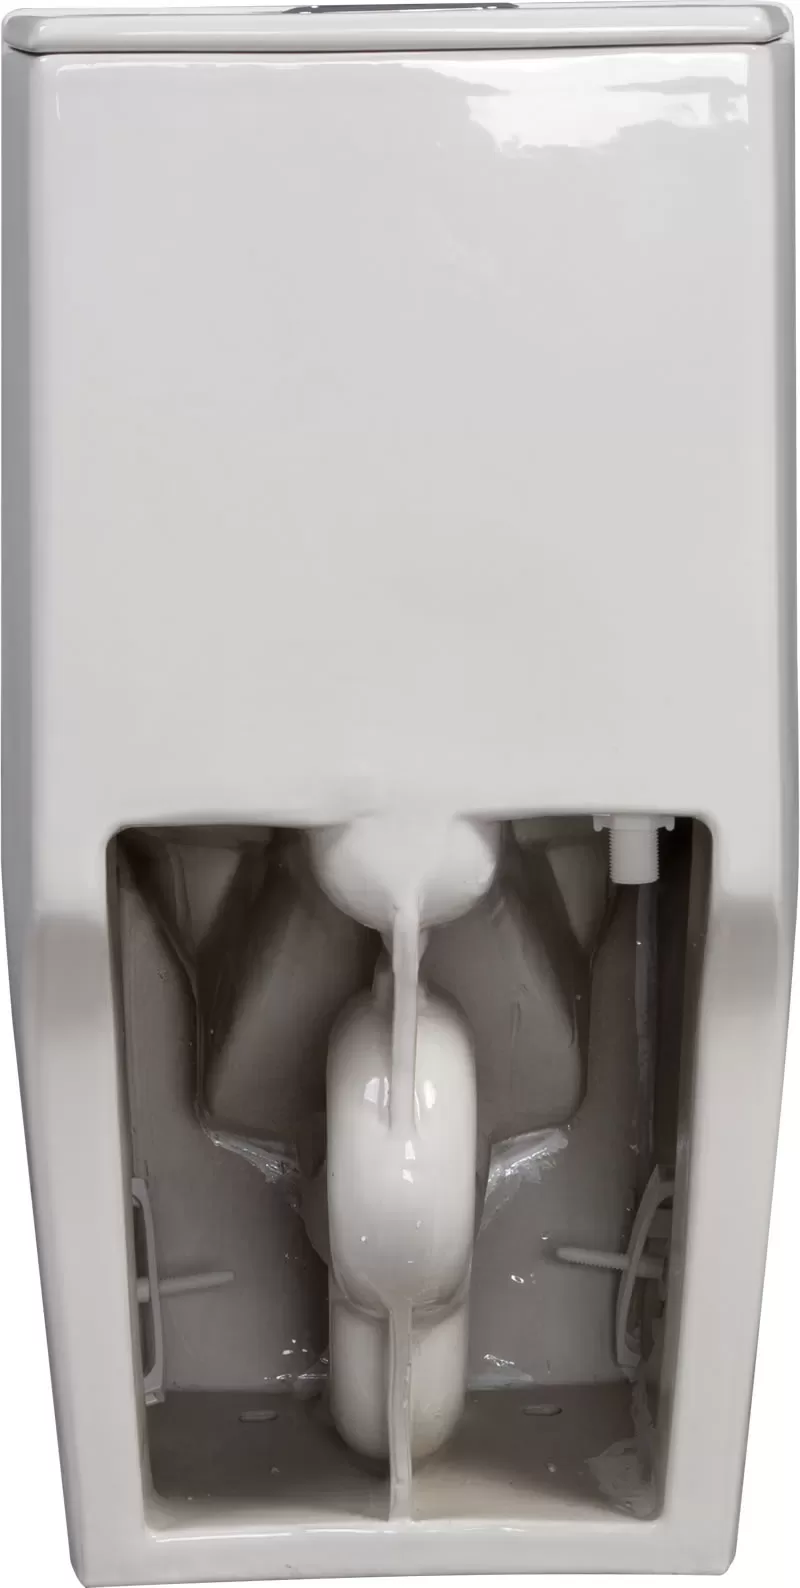 1.11.6 Gpf Dual Flush 1 Piece Elongated Toilet With Soft Close Seat Gloss White, Water Saving, Modern, Stylish Design 23t01 Gw 5